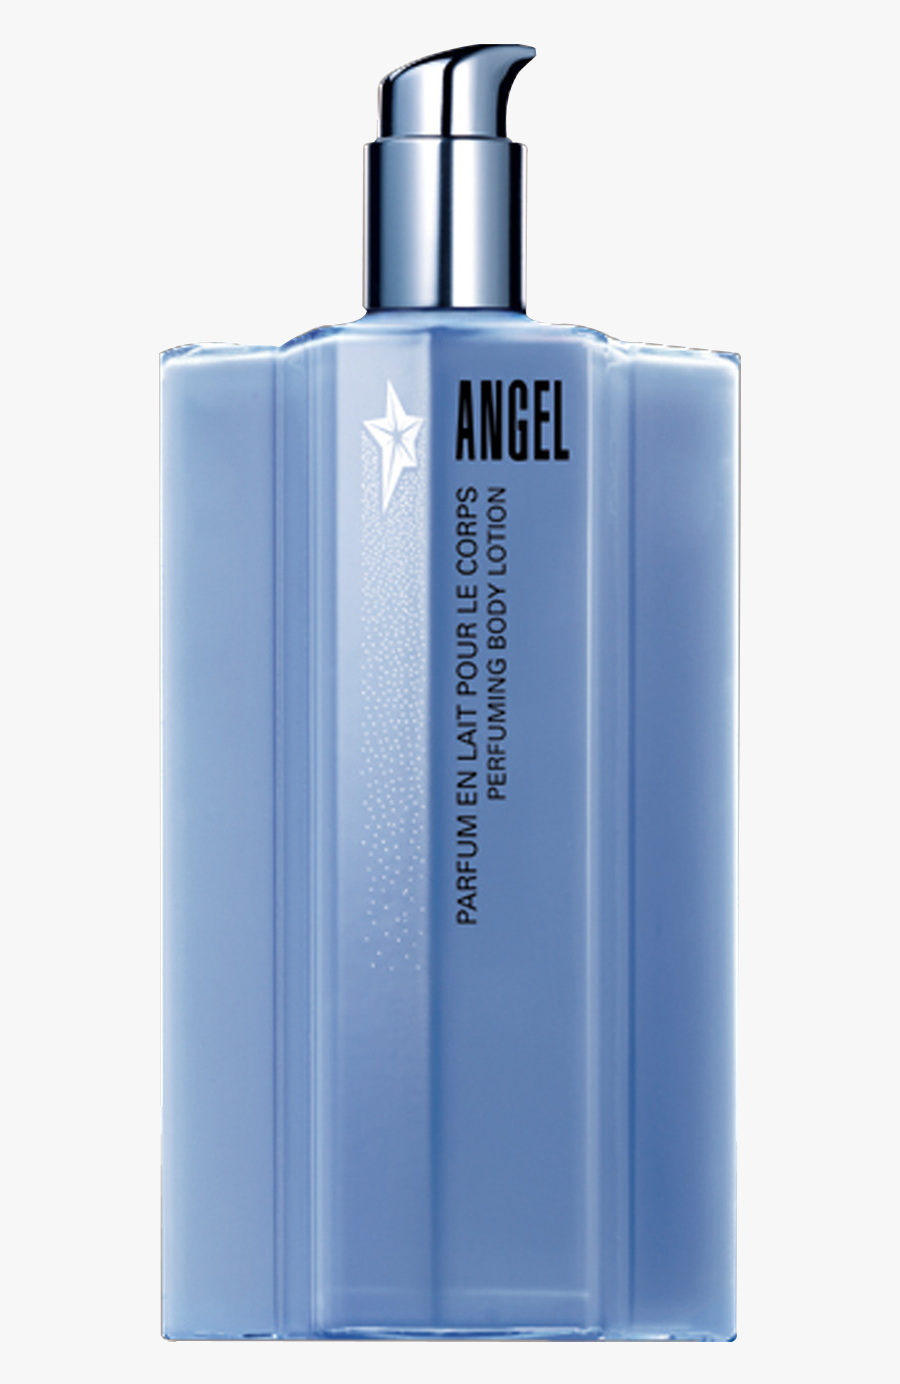 Clip Art Thierry Mugler Perfuming Body - Thierry Mugler Angel, Transparent Clipart